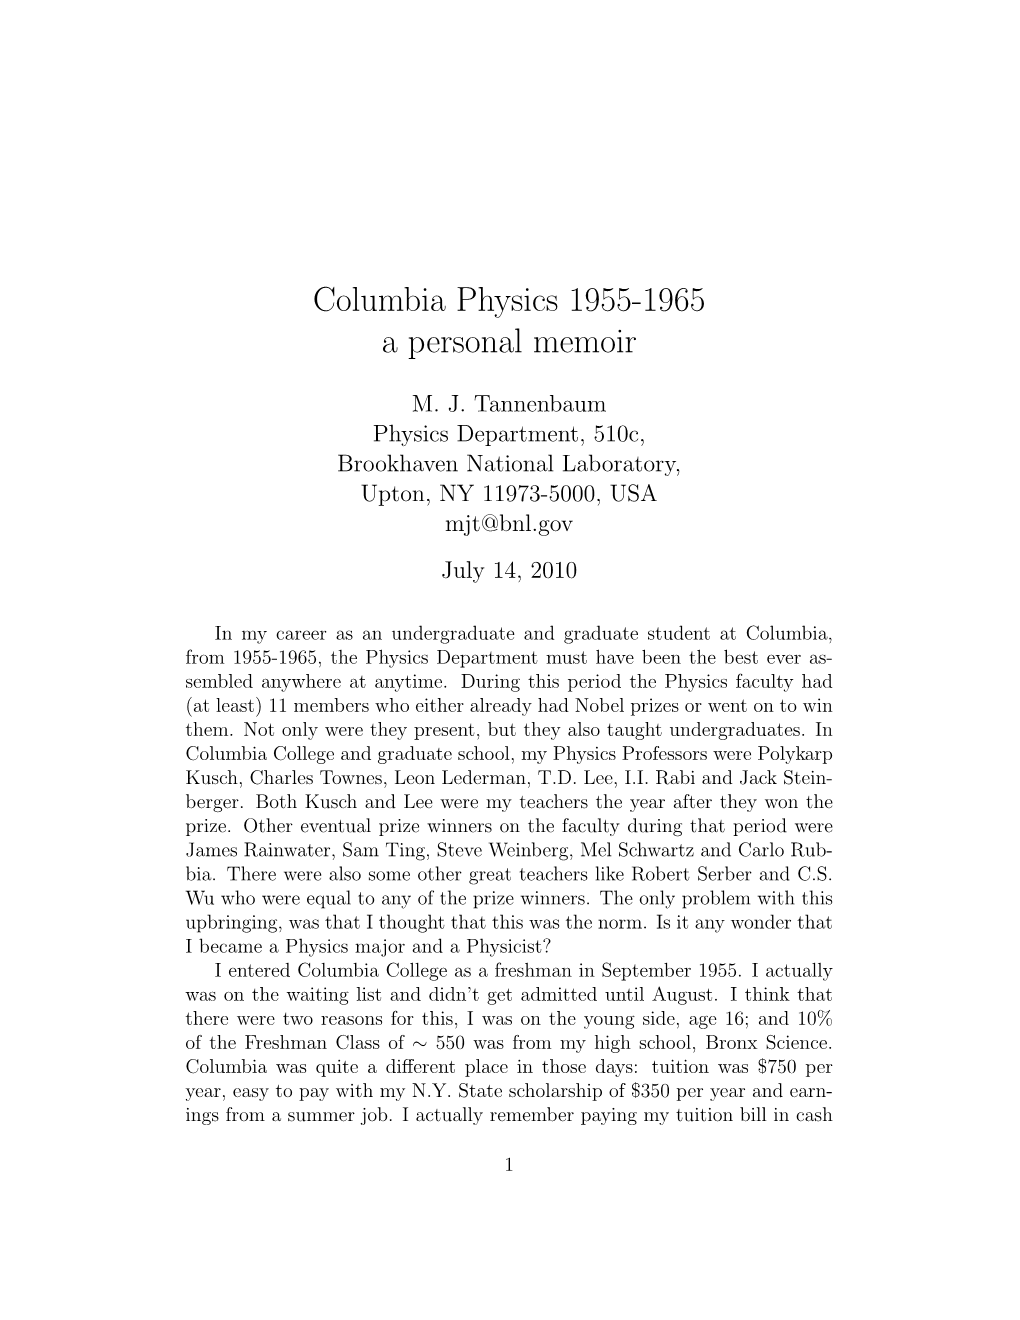 Columbia Physics 1955-1965 a Personal Memoir